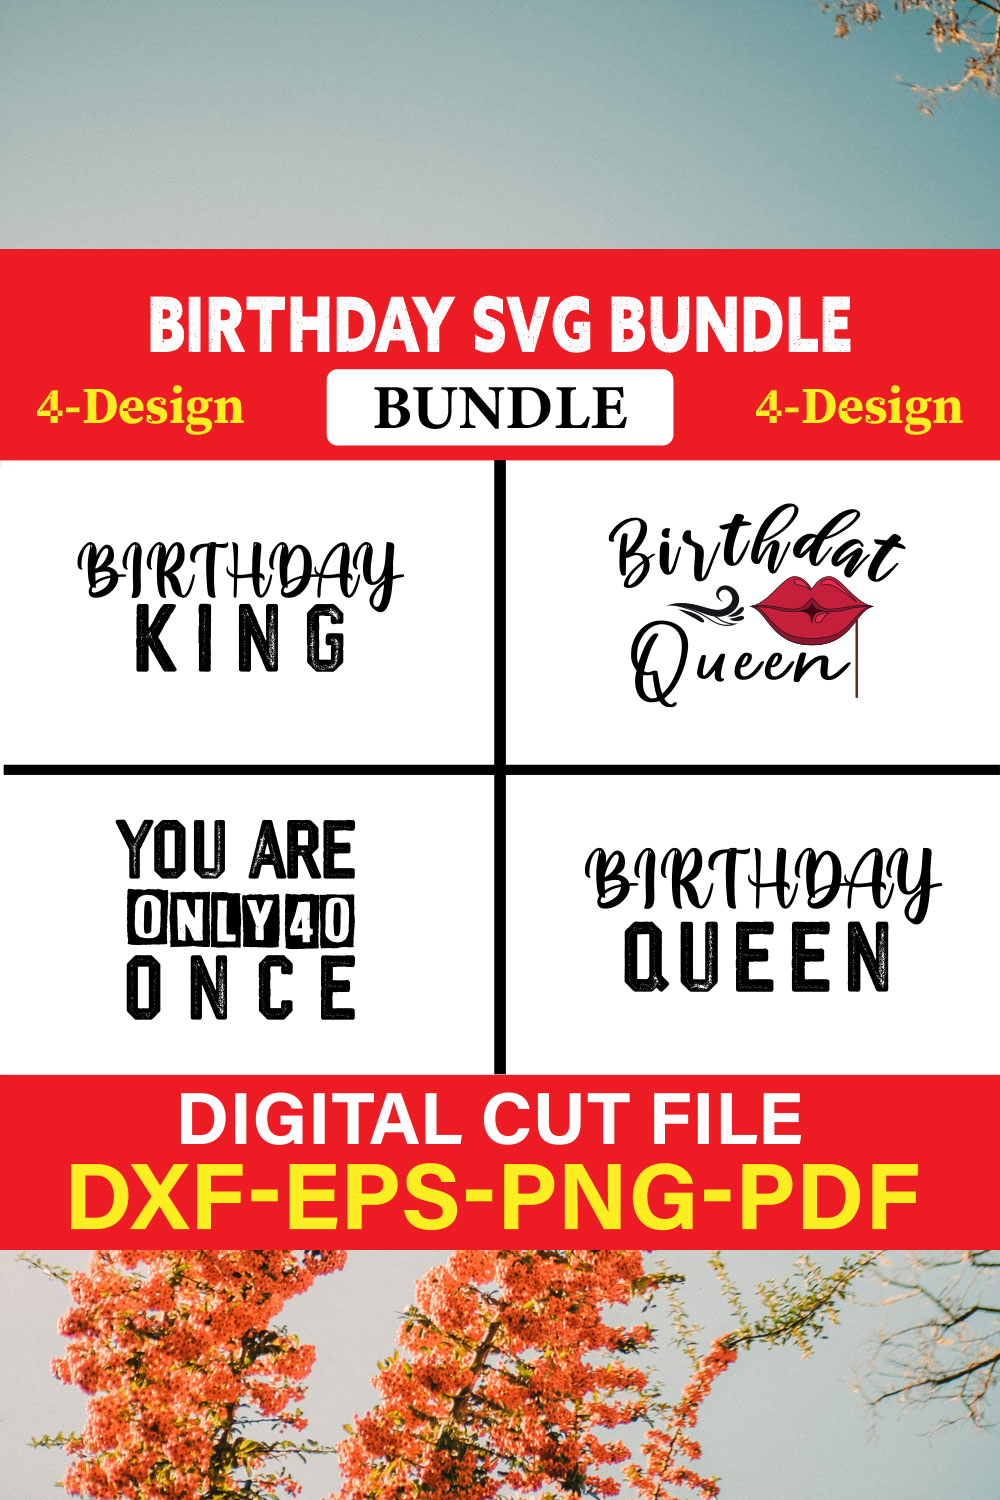 Birthday SVG T-shirt Design Bundle Vol-21 pinterest preview image.